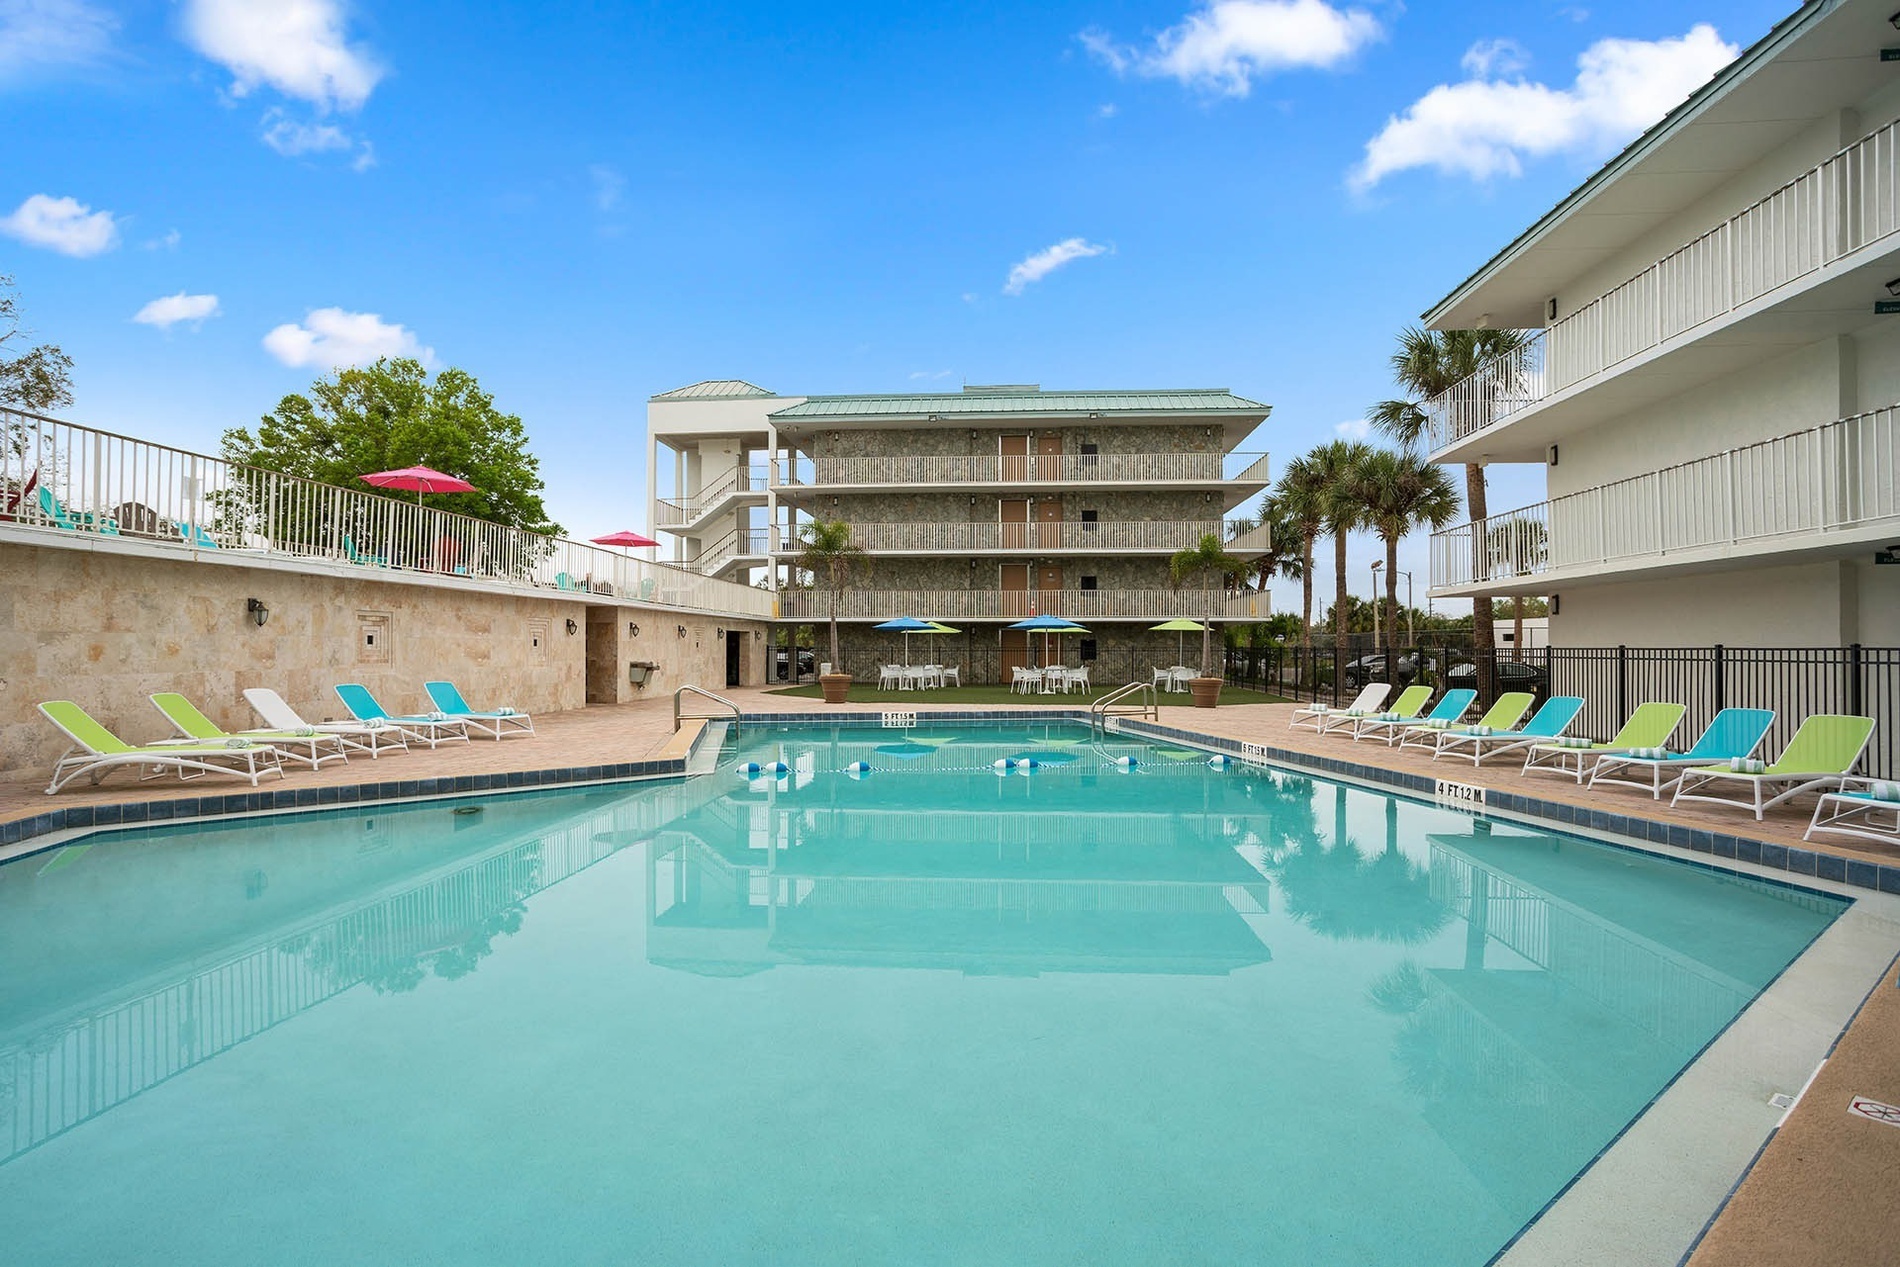 General view of the outdoor pool and facilities at Park Royal Orlando